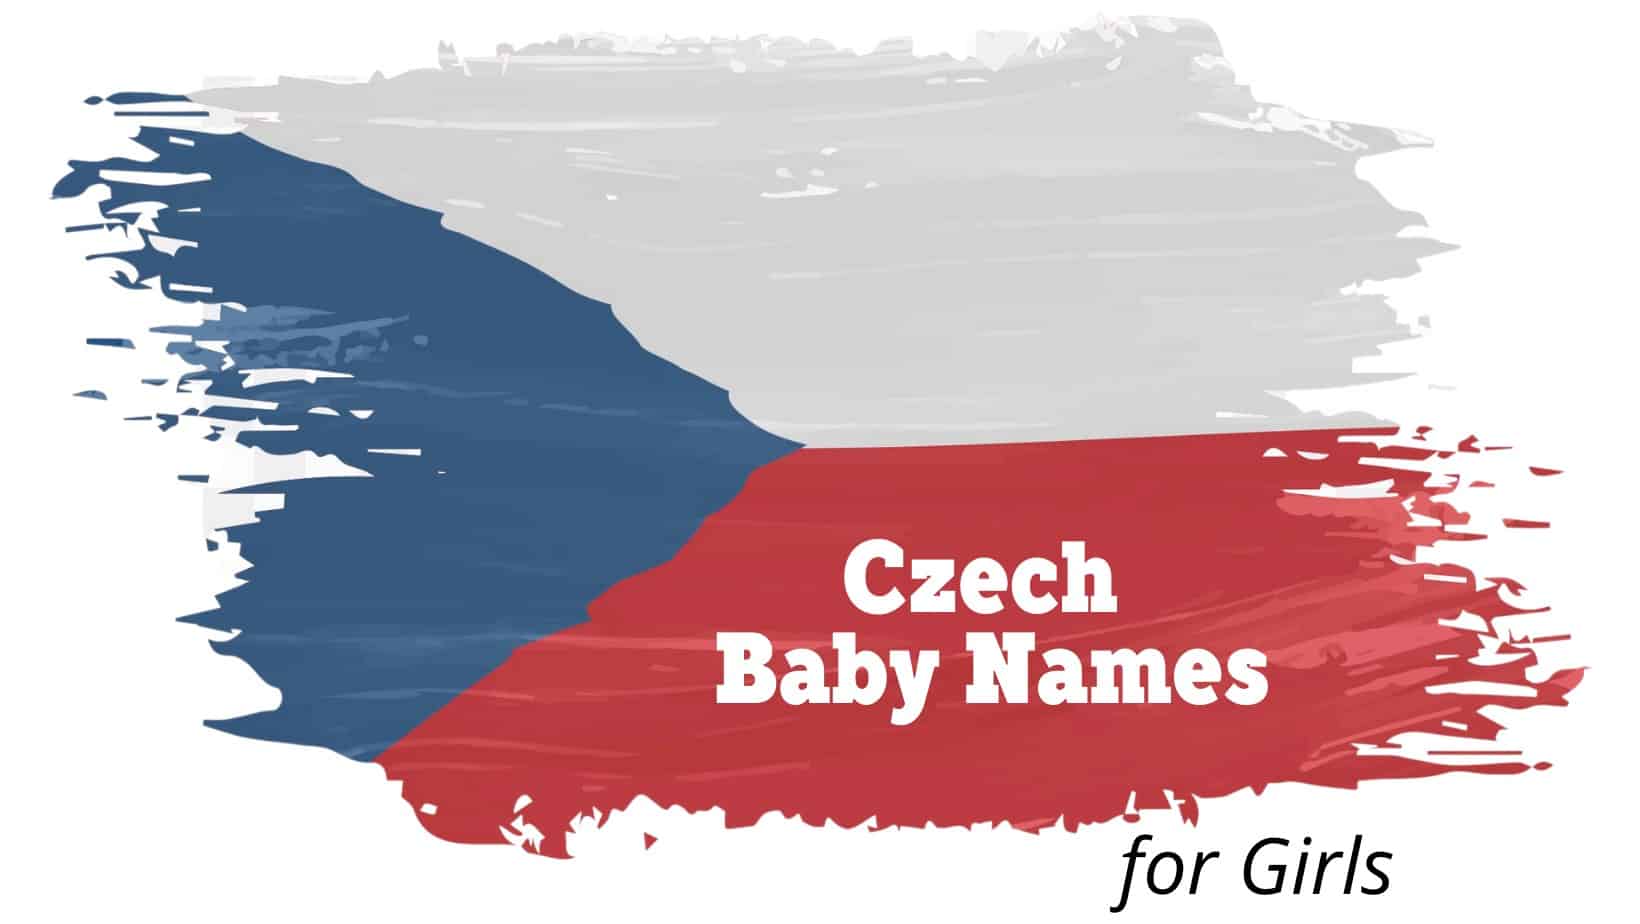 Czech Baby Names for Girls